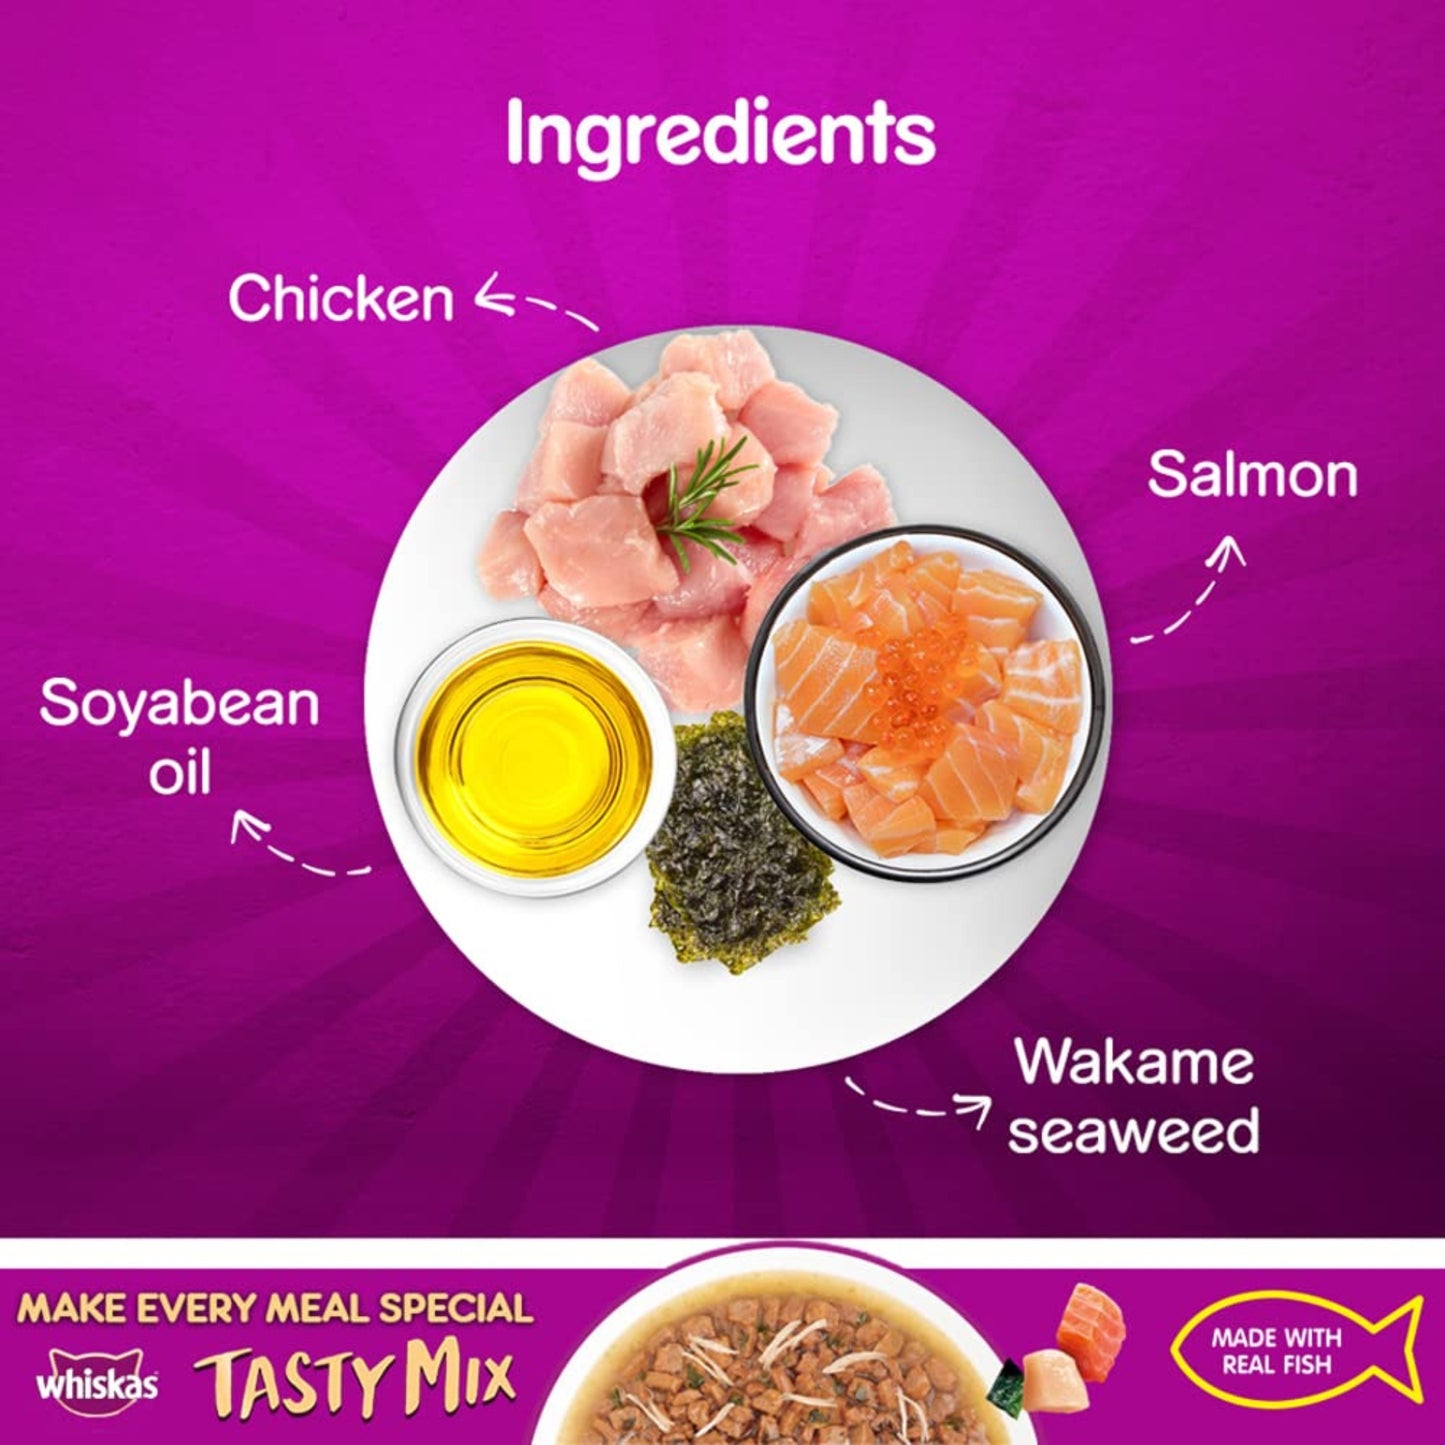 Whiskas Adult Cat Tasty Mix Chicken Salmon in Gravy - 70g, Pack of 12